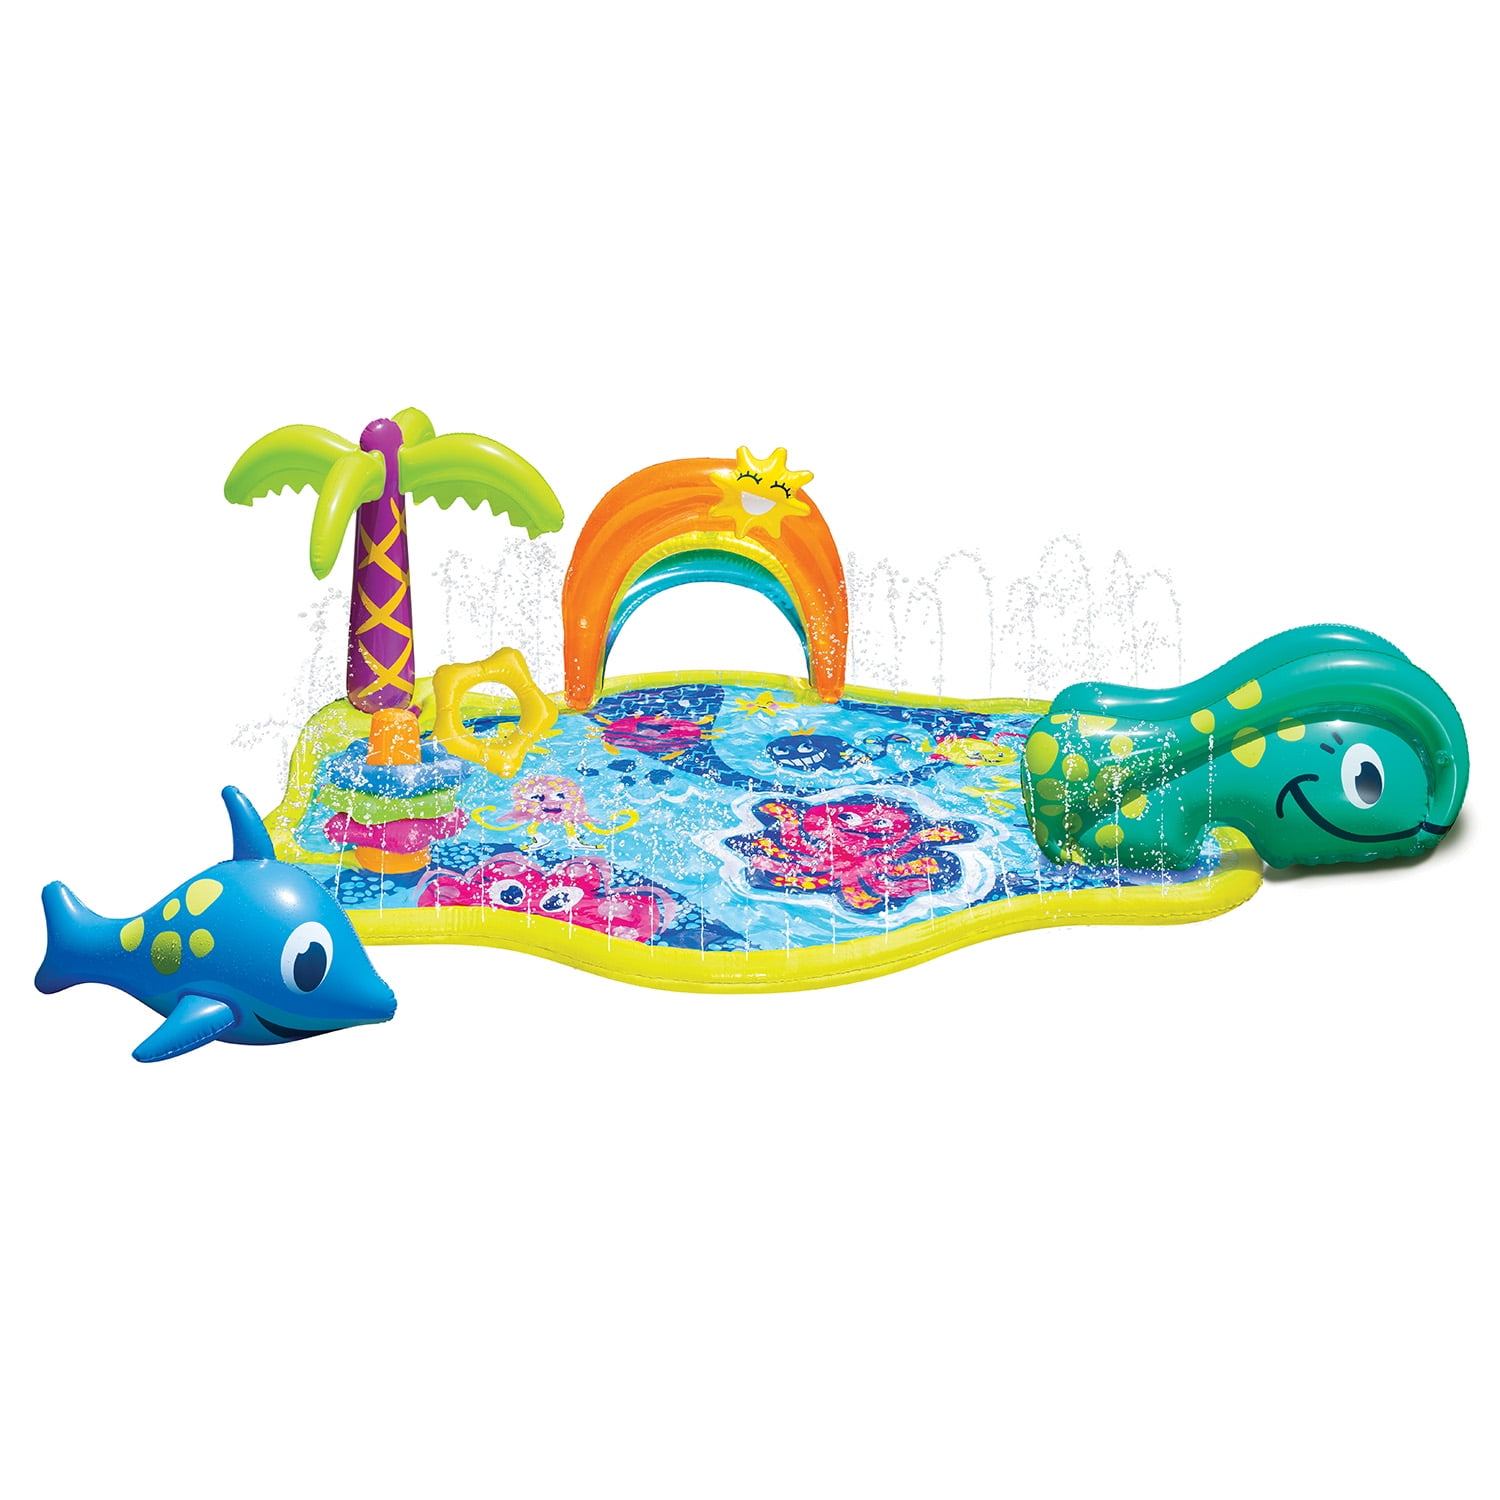 Banzai Jr. Splish Splash Water Park Outdoor Summer Play Center $30  + Free S&H w/ Walmart+ or $35+